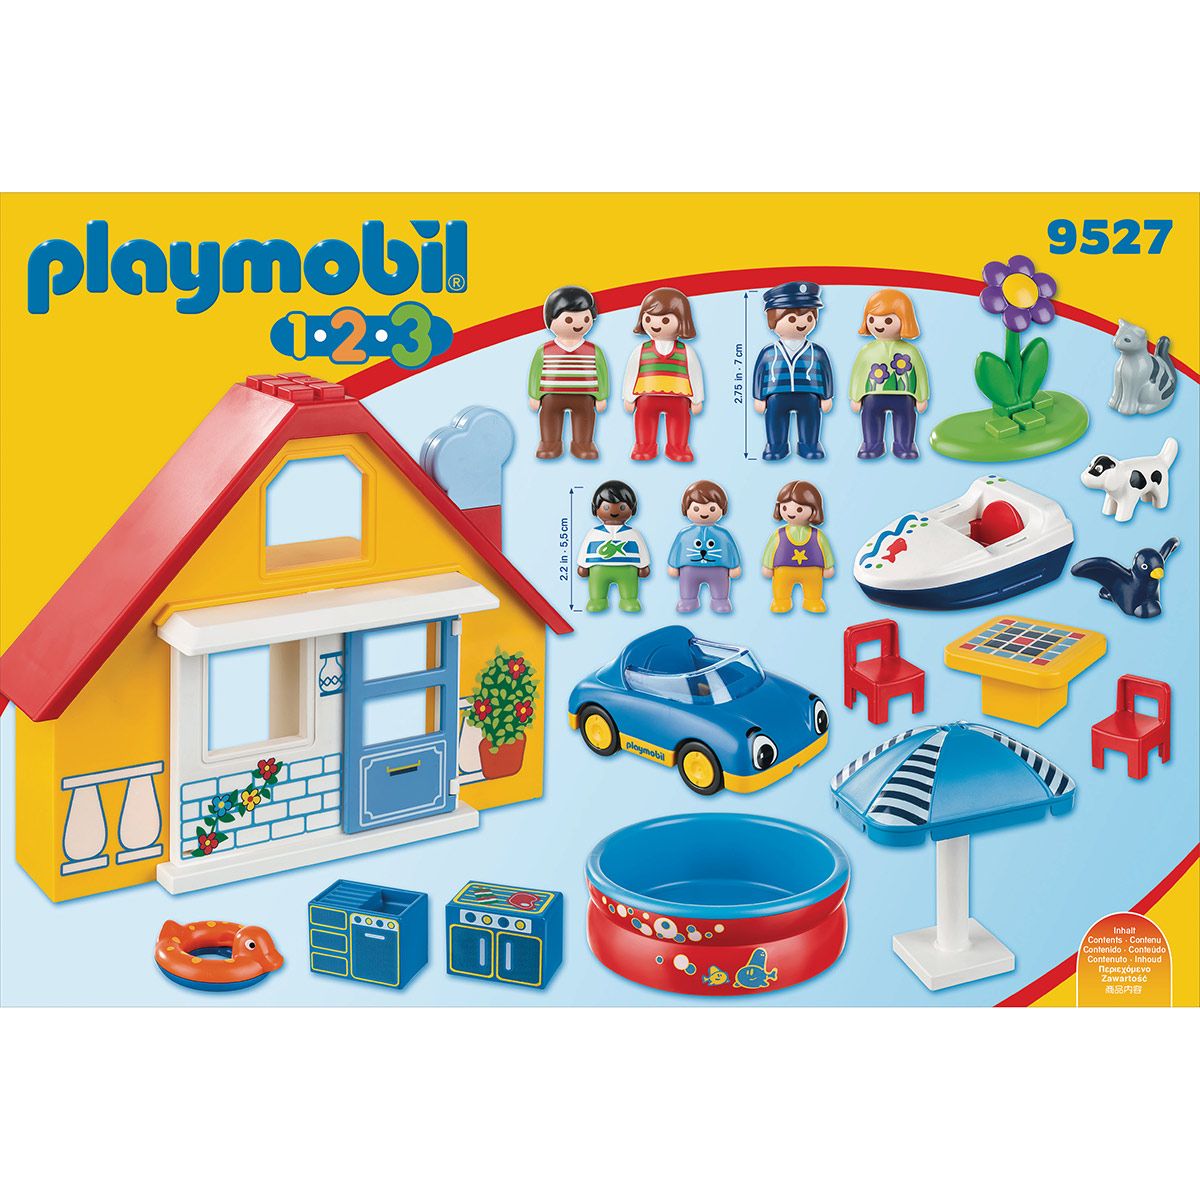 playmobil 123 grande maison